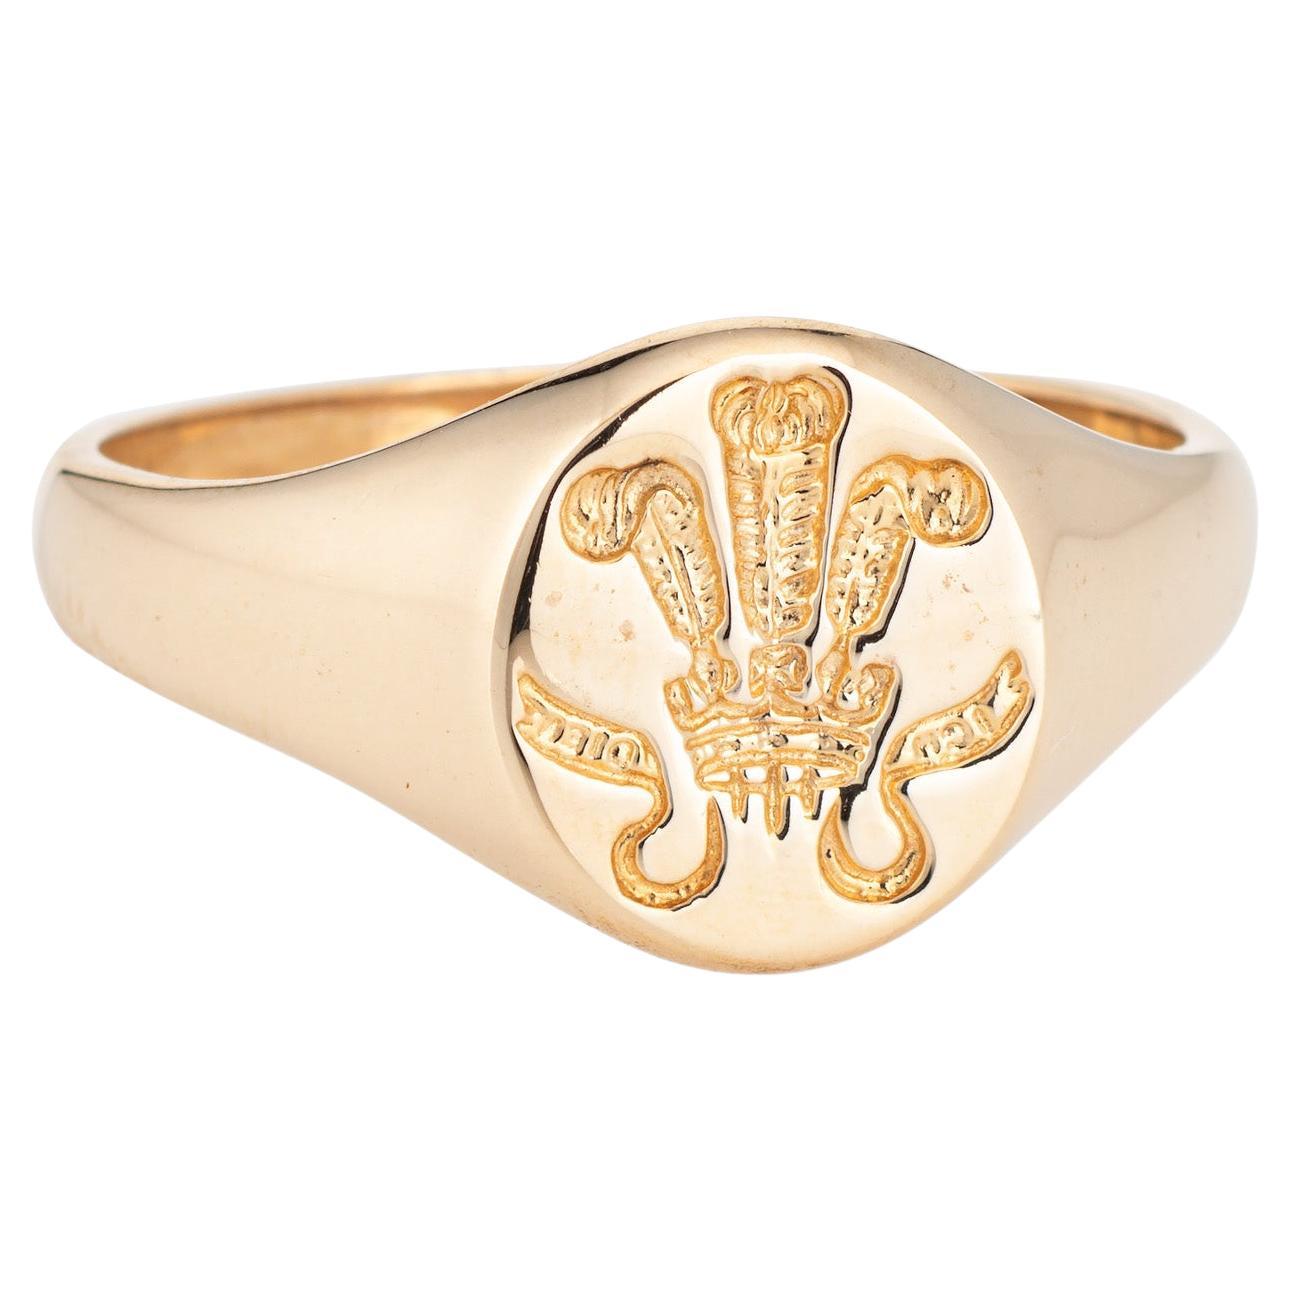 Prince Wales and Wales Signet Ring Vinatge 9k Yellow Gold Men's Sz 12.5 